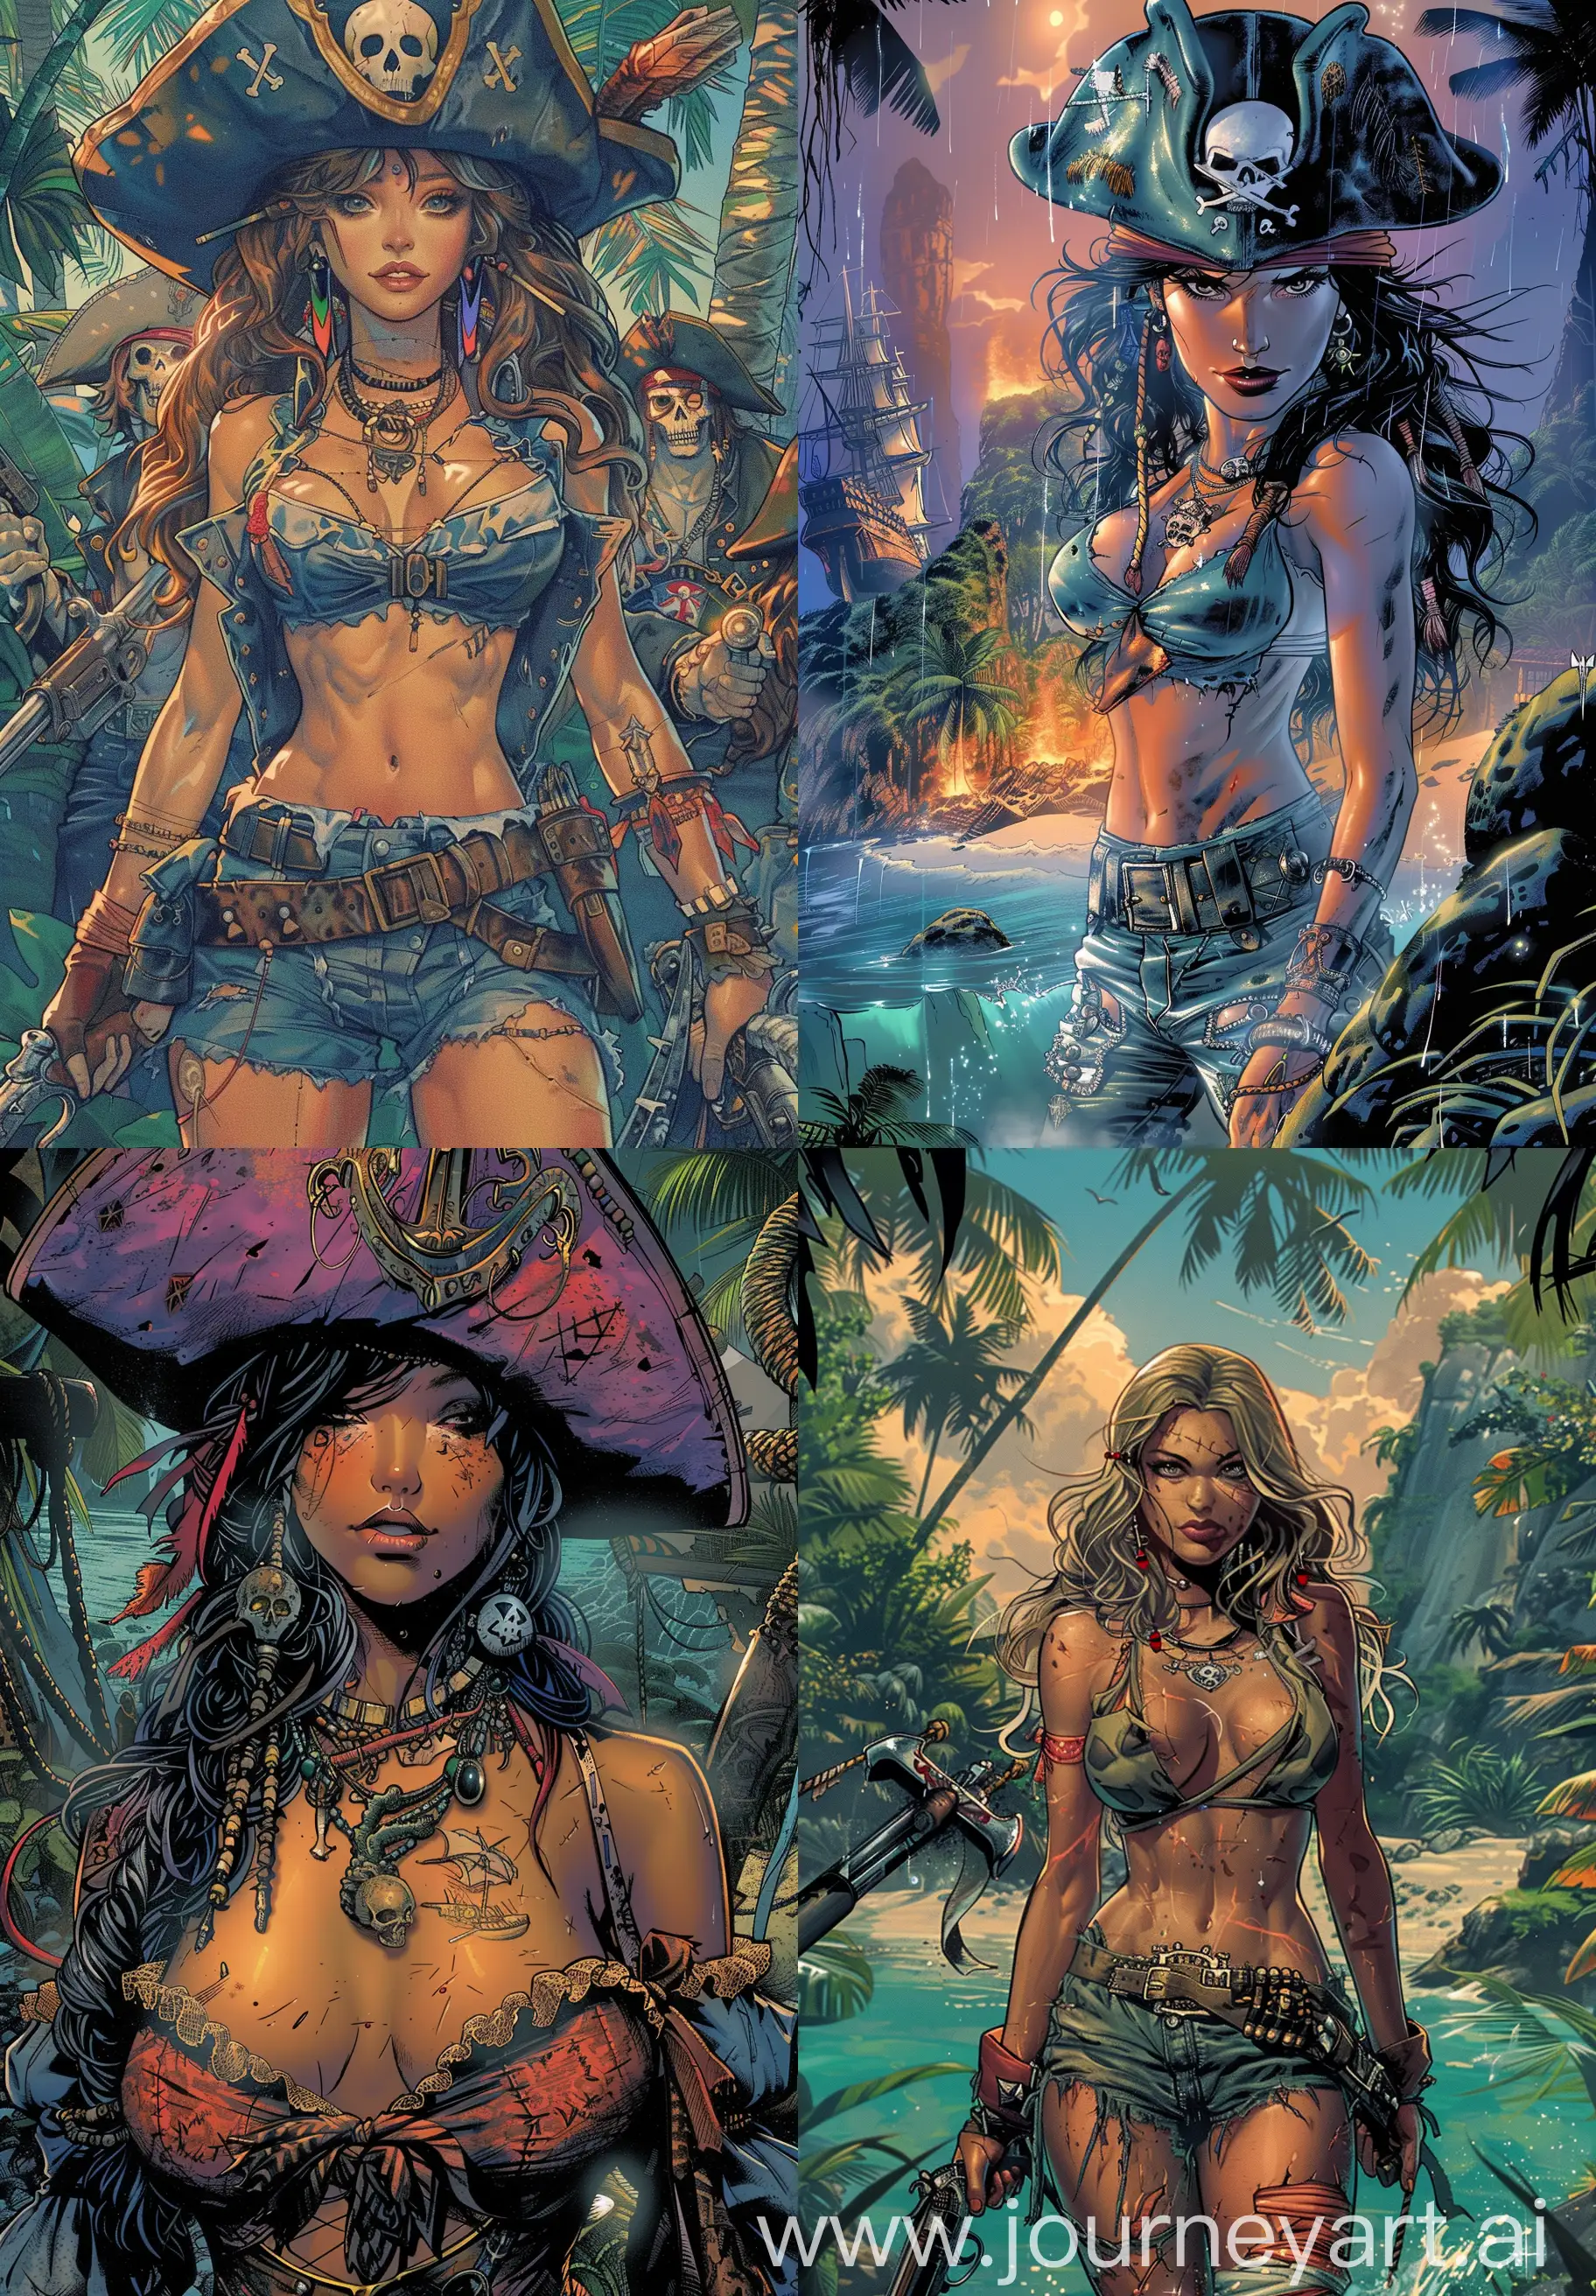 Adventure-of-a-Brave-Female-Pirate-Captain-Seeking-Treasure-on-Skull-Island